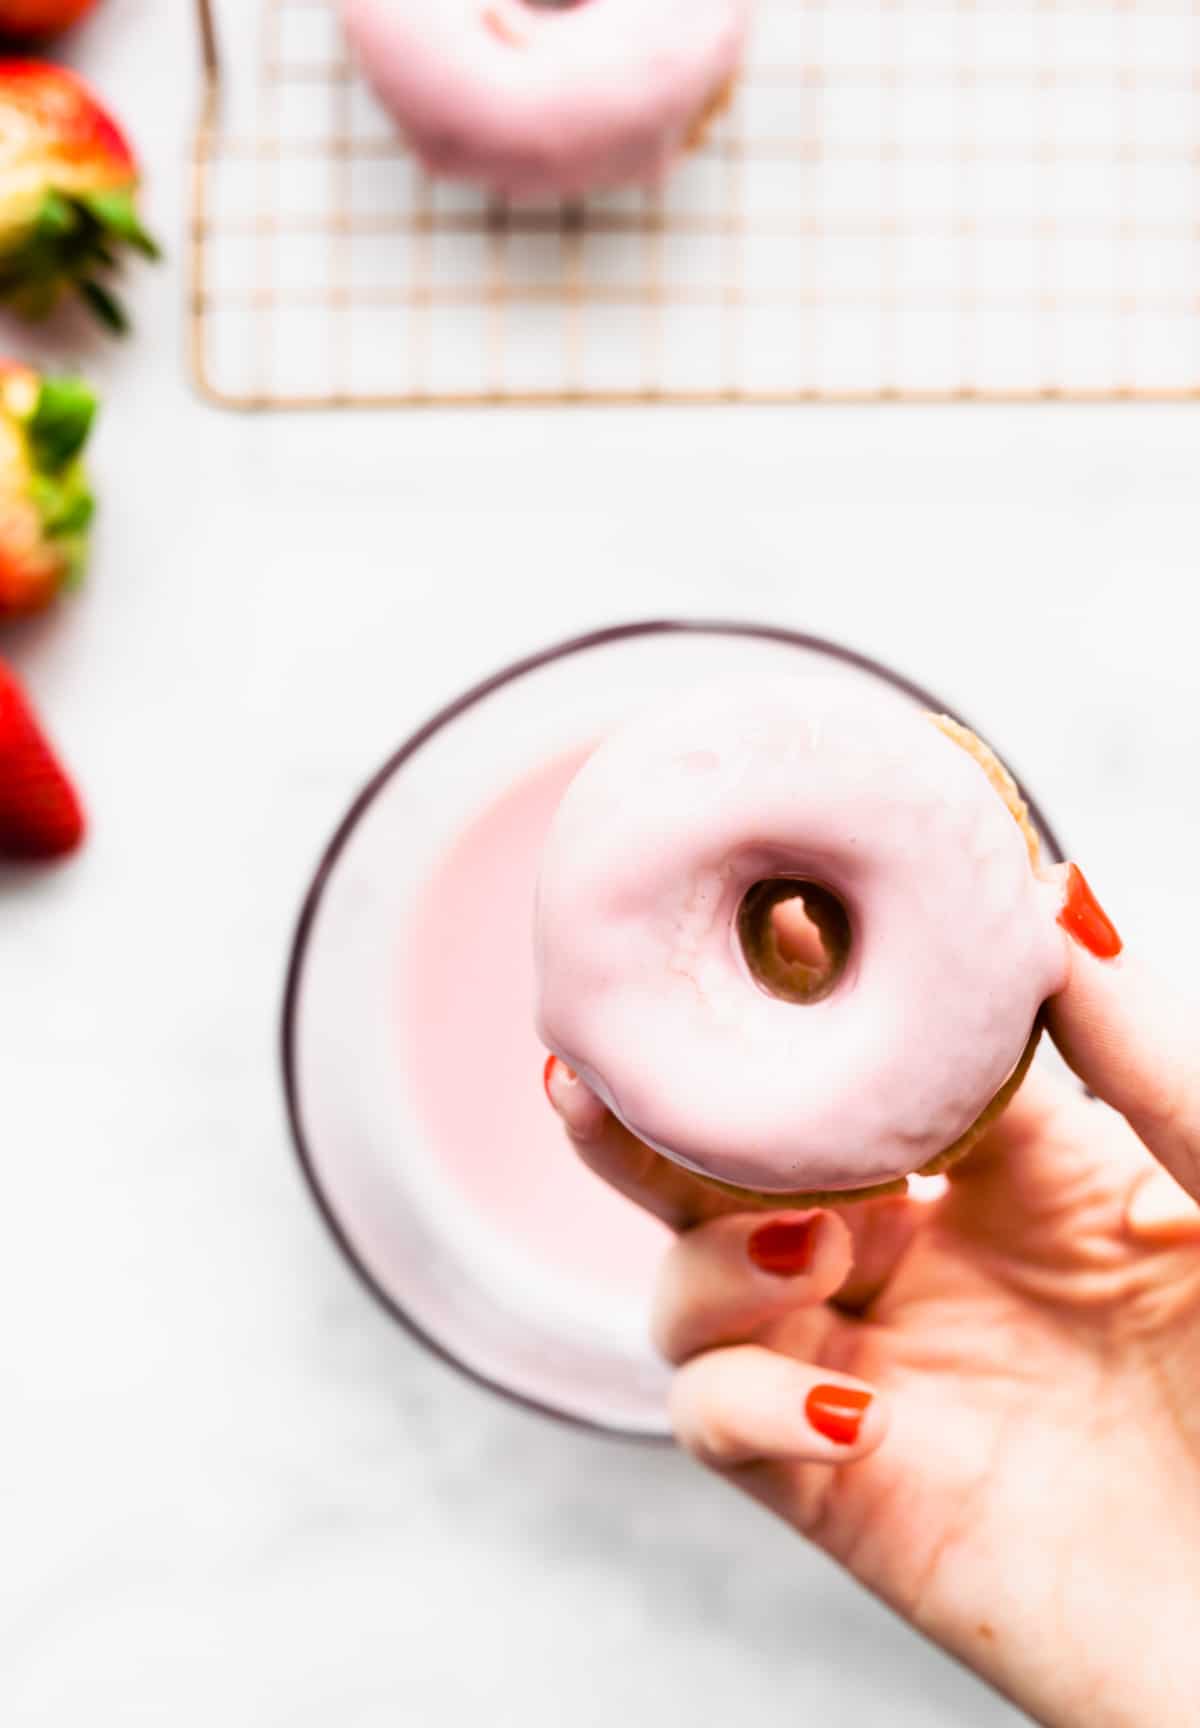 A woman's hand holding gluten free strawberry donut with strawberry yogurt glaze